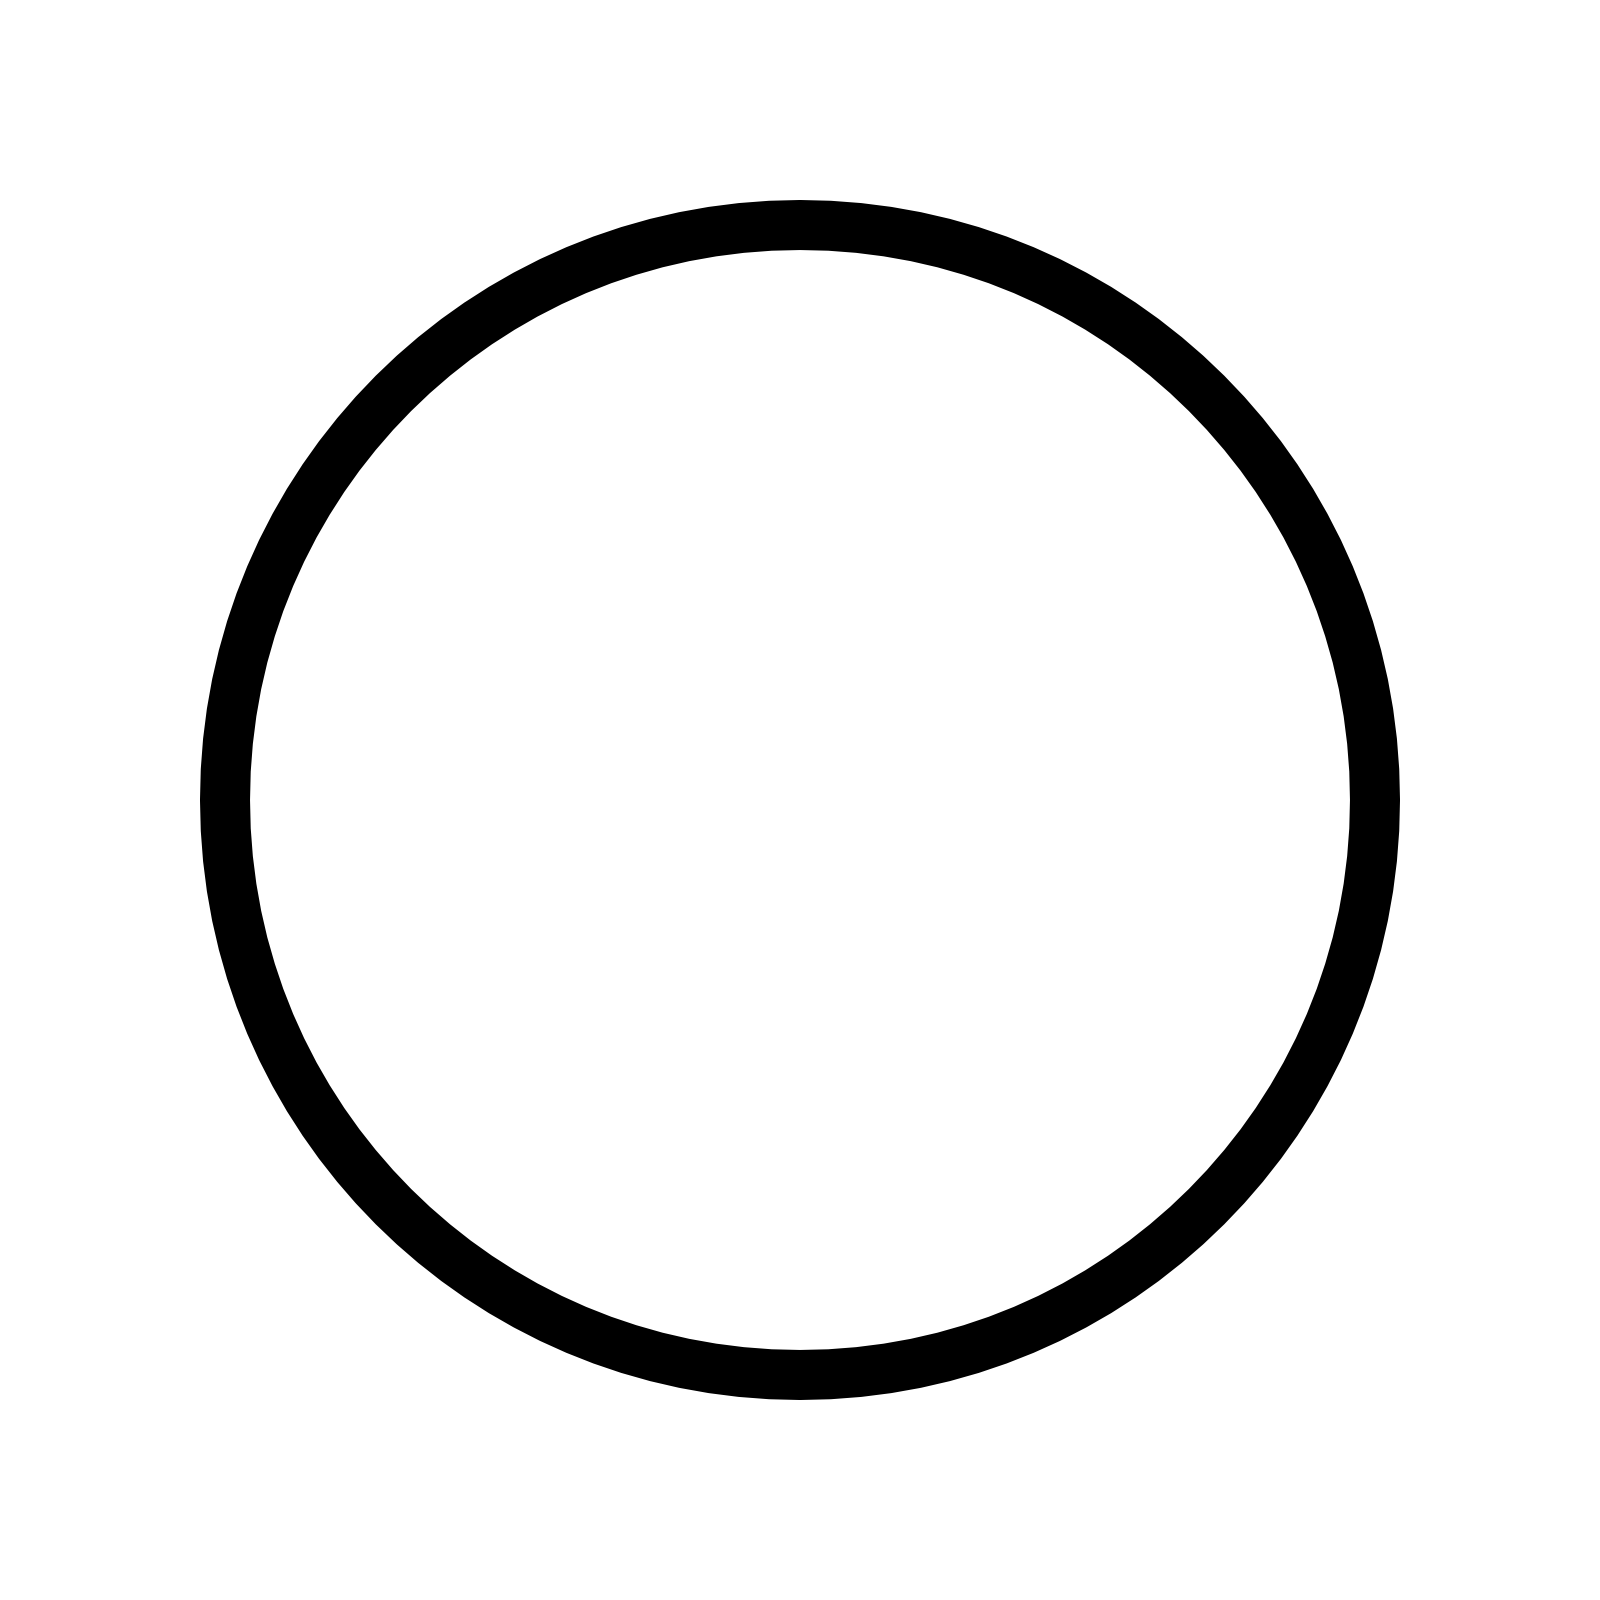 Design Circle Monochrome Square Black PNG